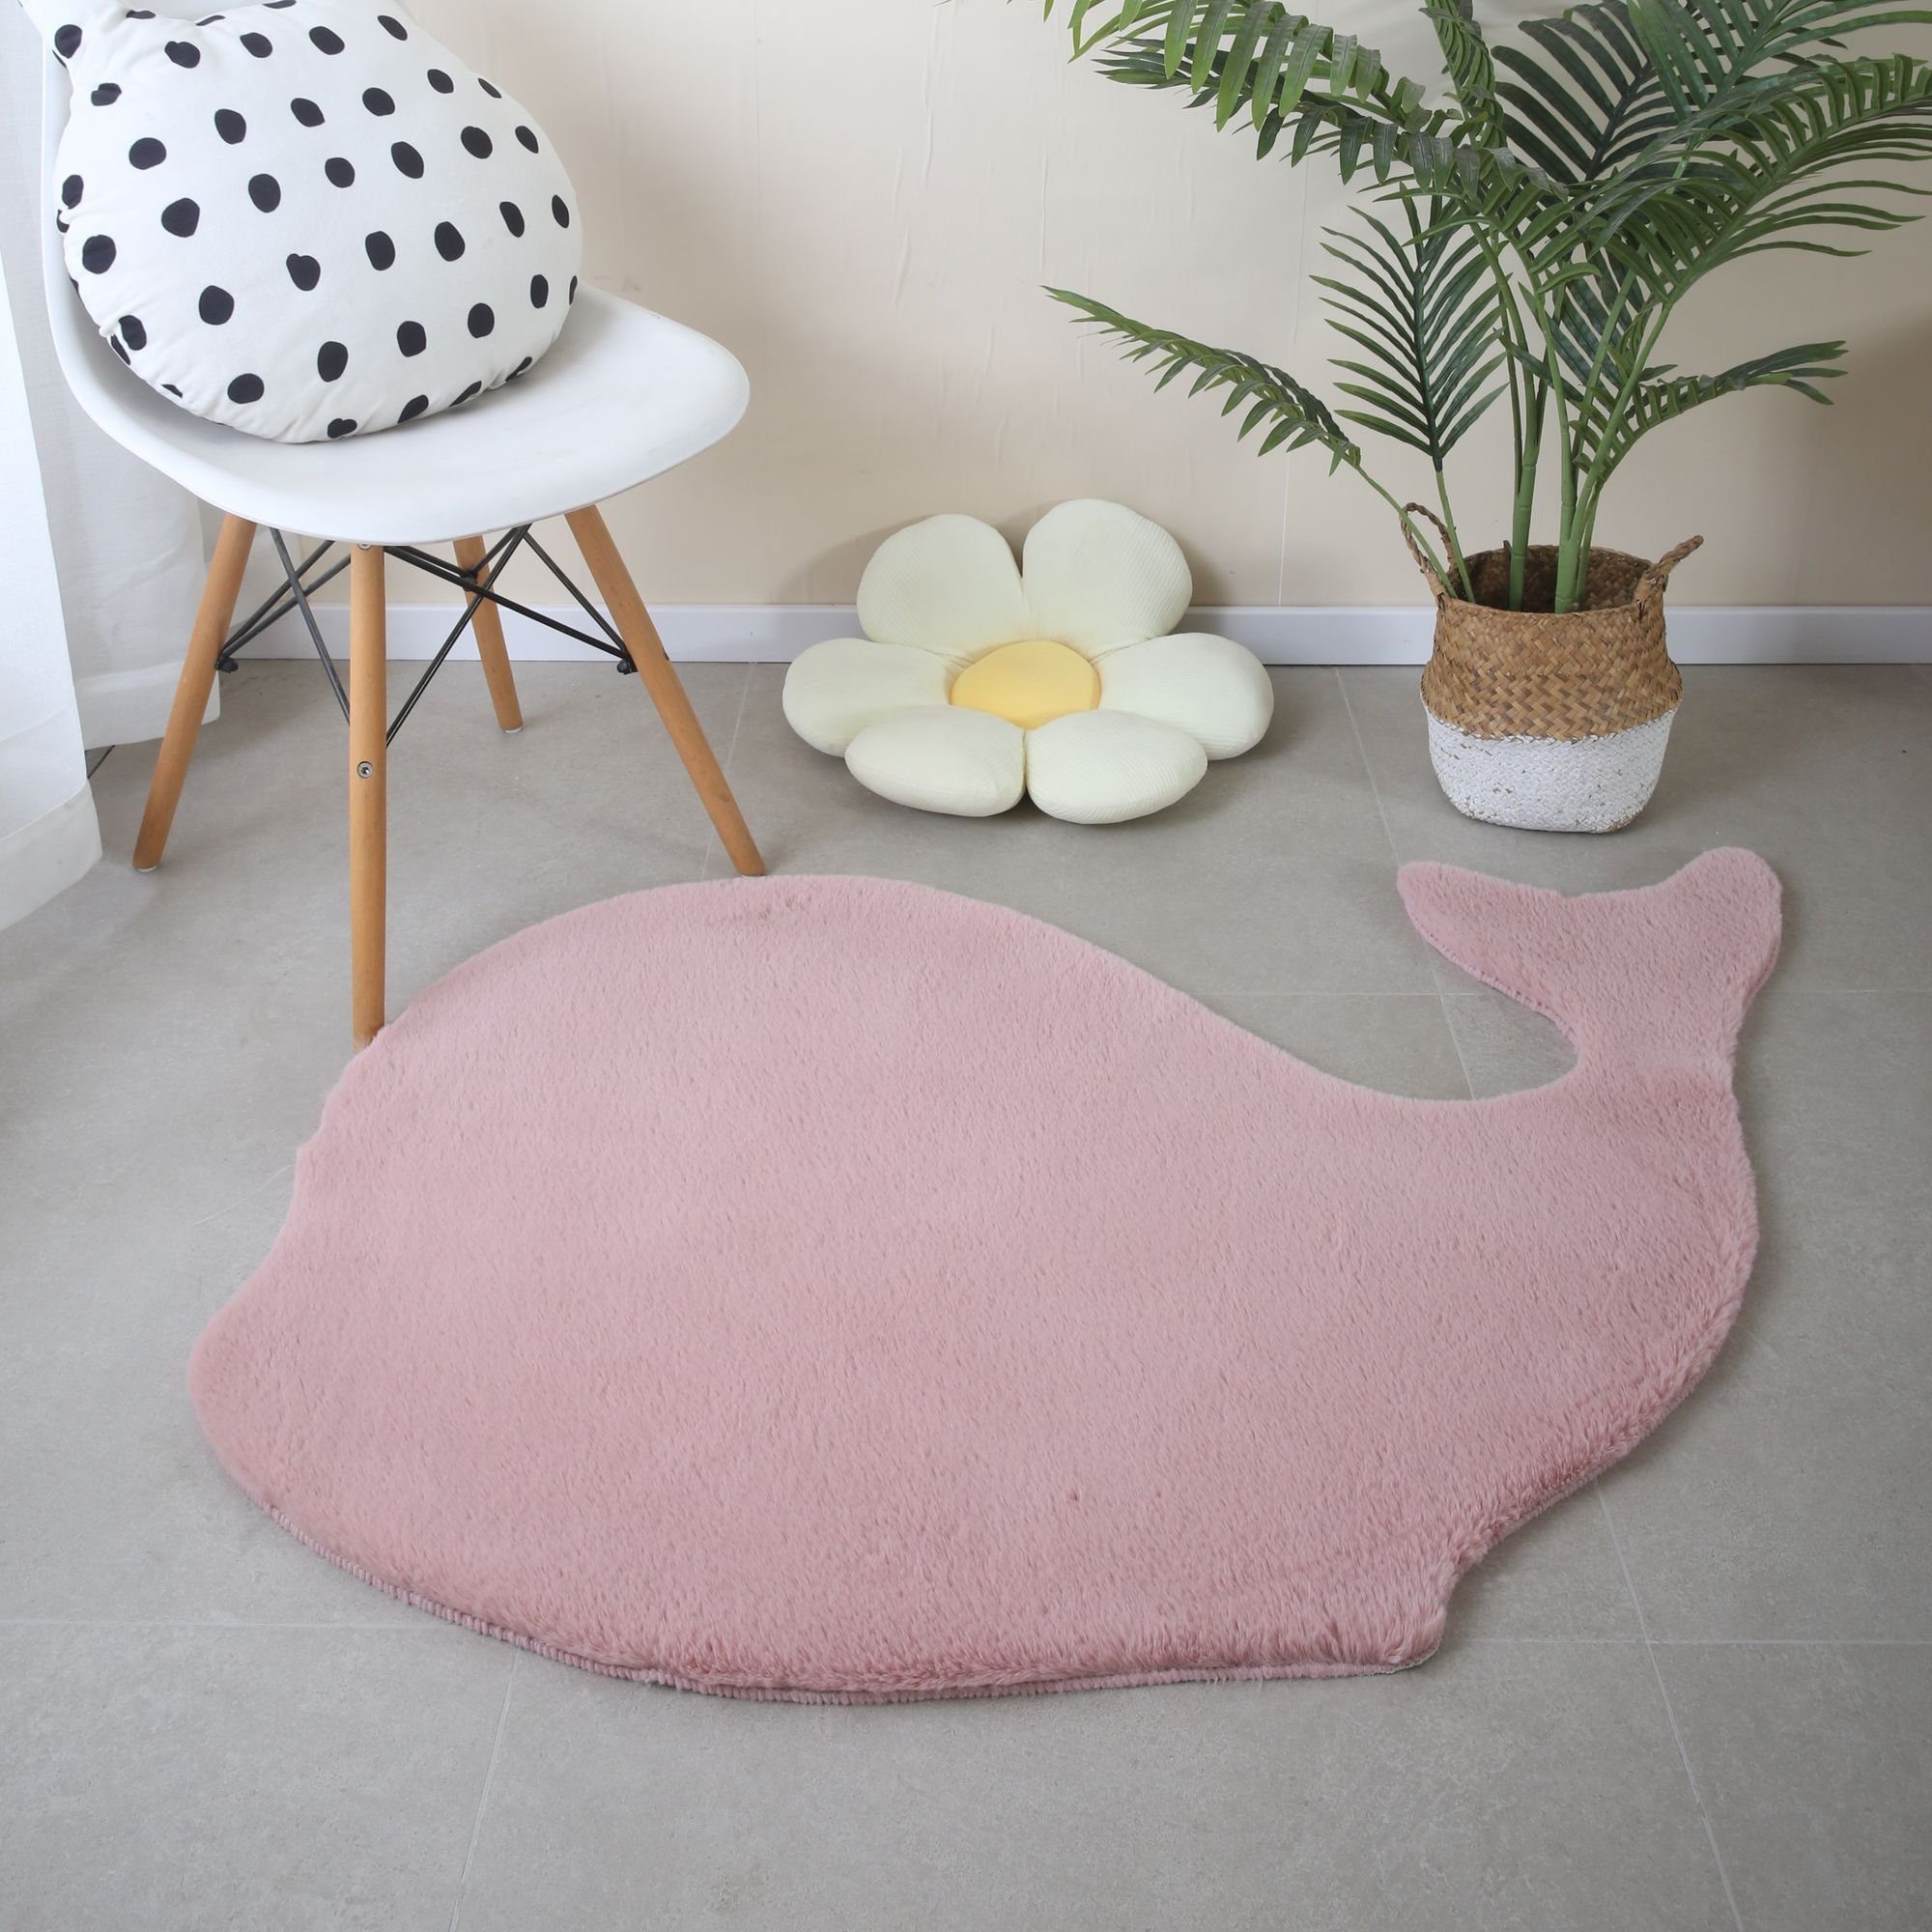 Fellteppich Wal Form, Carpetsale24, Läufer, Höhe: 25 mm, Teppich Plüsch Einfarbig Walform Kunstfell Kinderzimmer Rosa